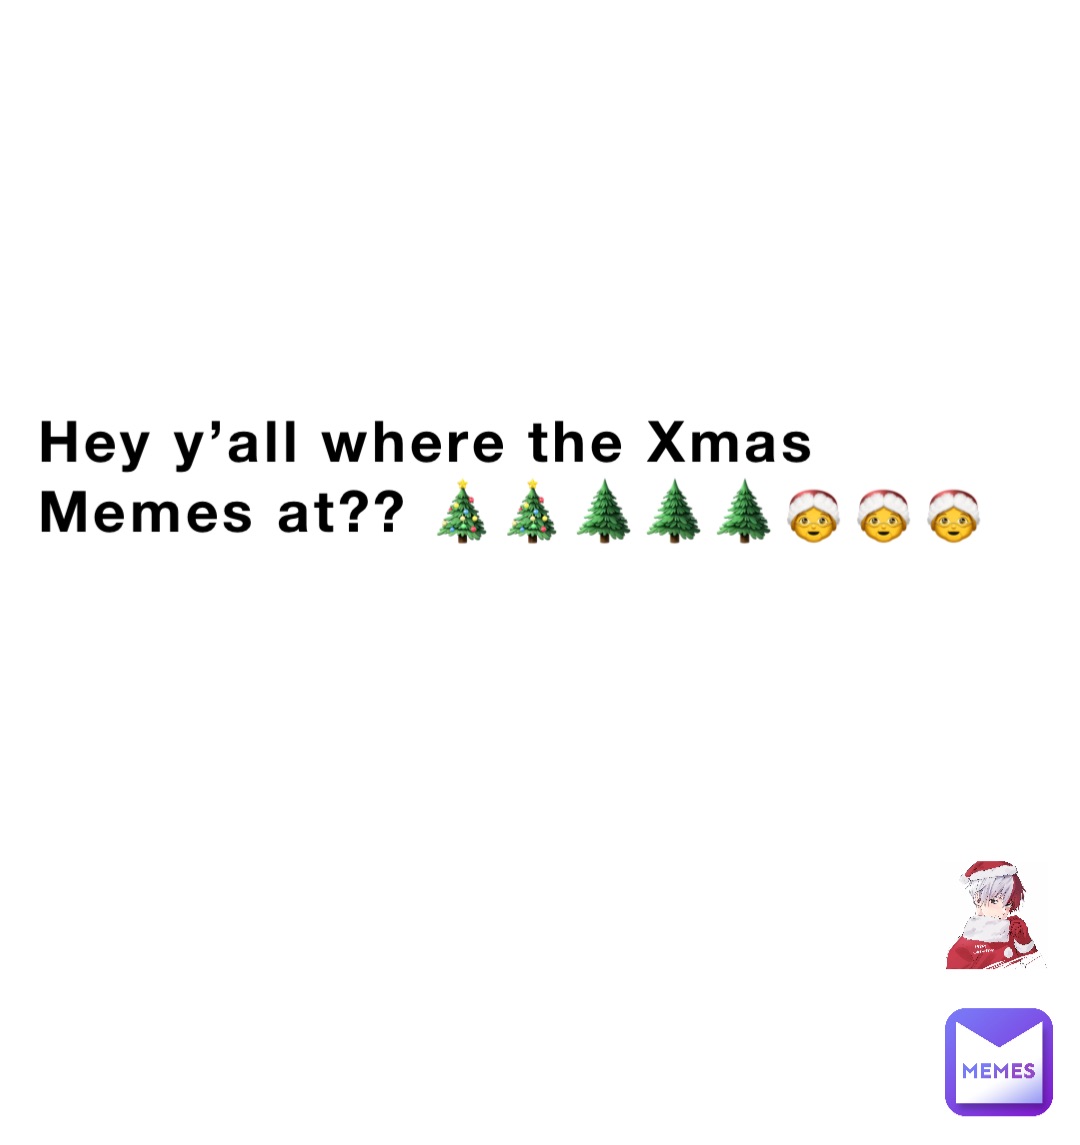 Hey y’all where the Xmas Memes at?? 🎄🎄🌲🌲🌲🤶🤶🤶